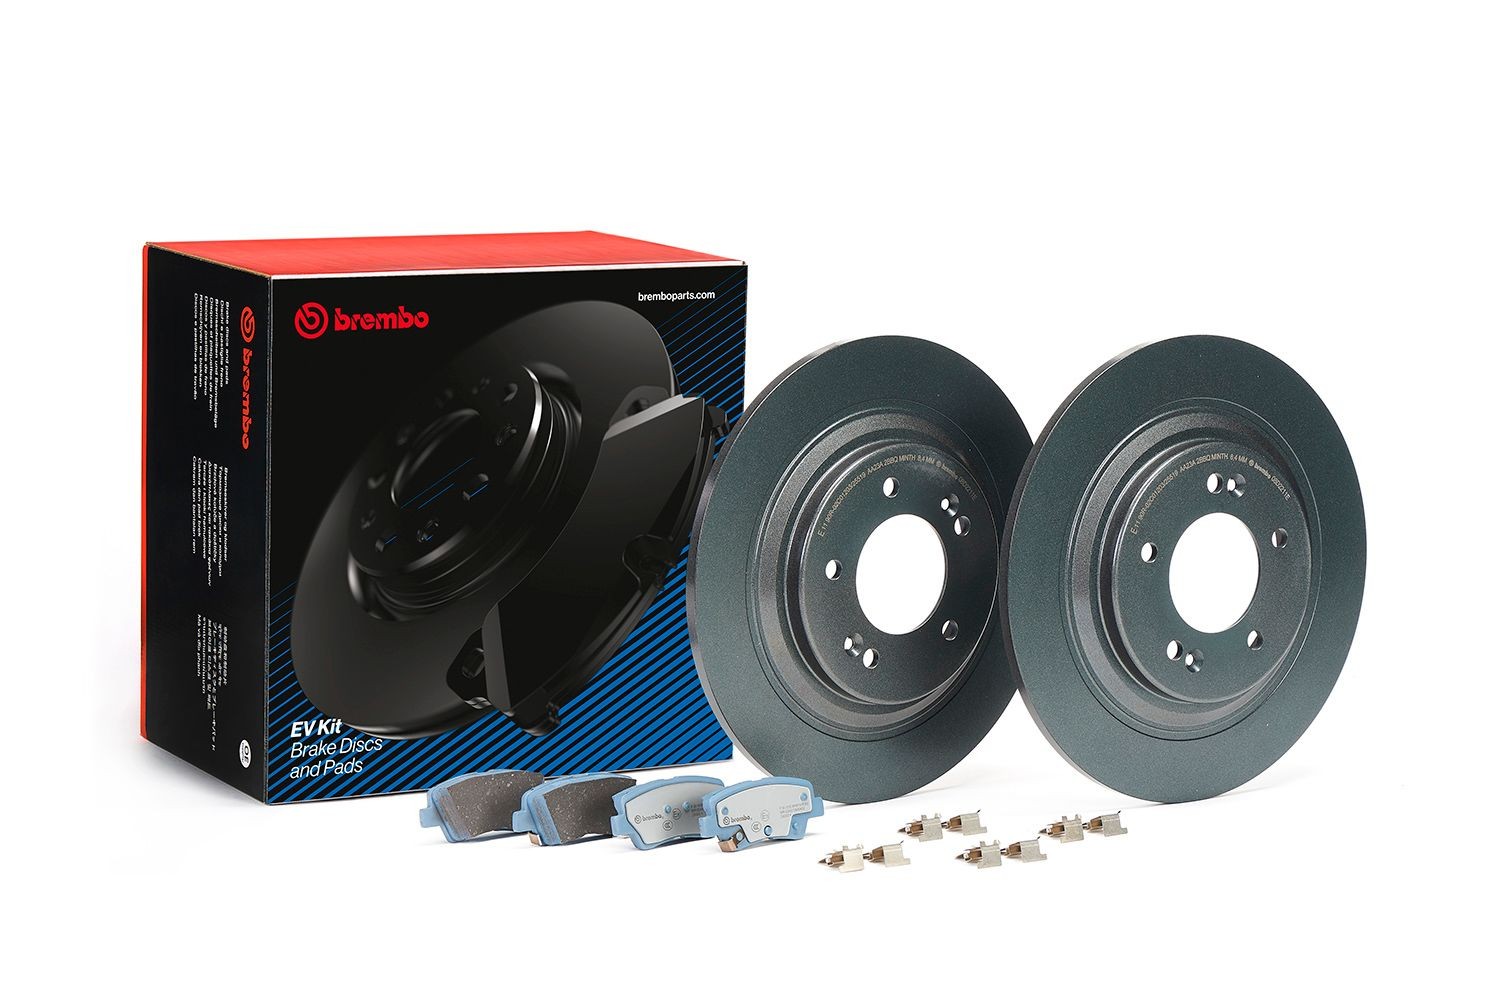 Hyundai Brake discs and pads set BREMBO KT 08 015 at a good price